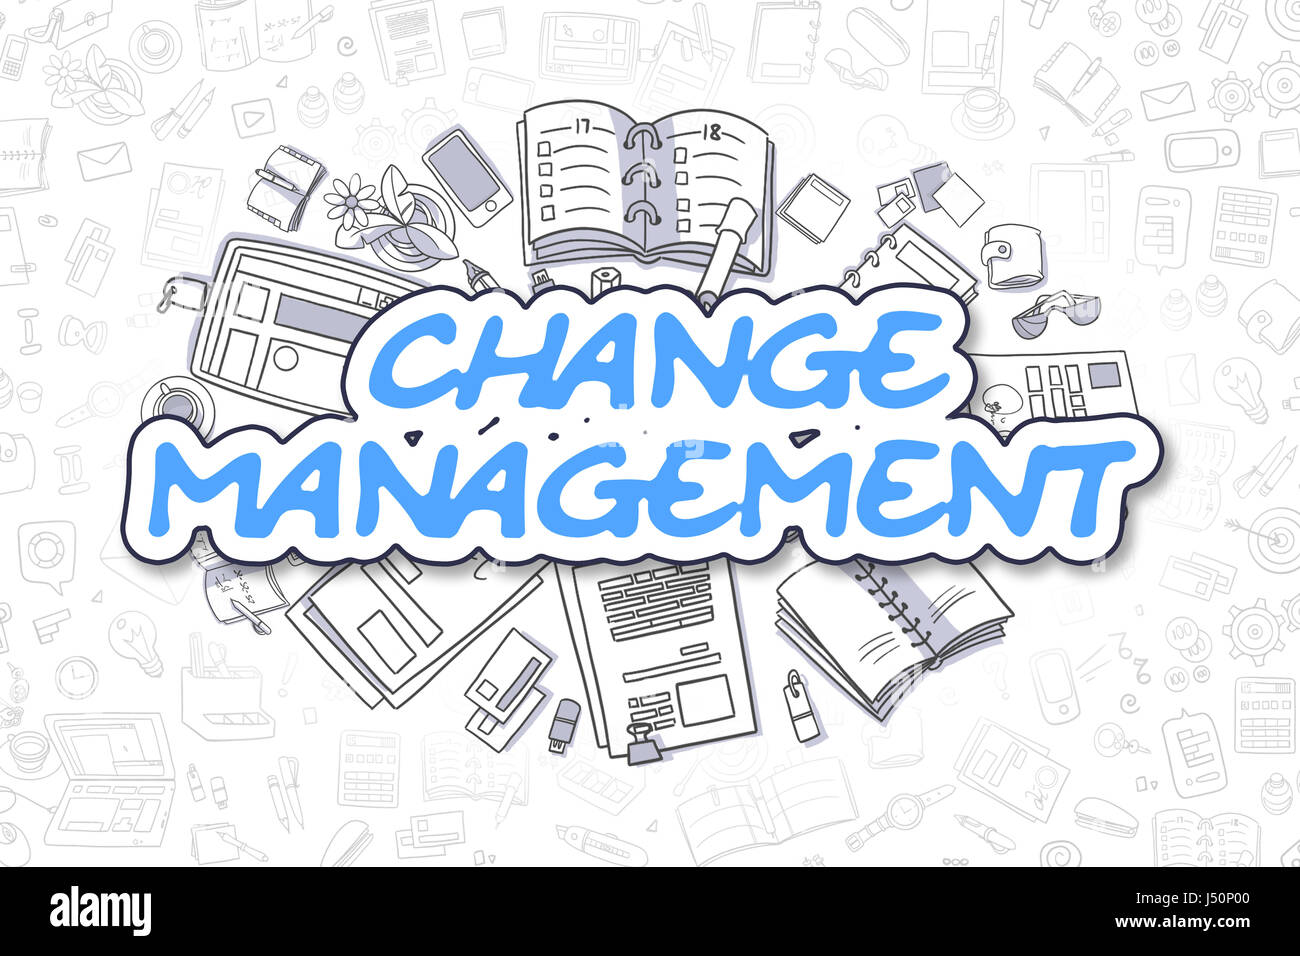 Change Management - Cartoon Blue Text. Business Concept. Stock Photo